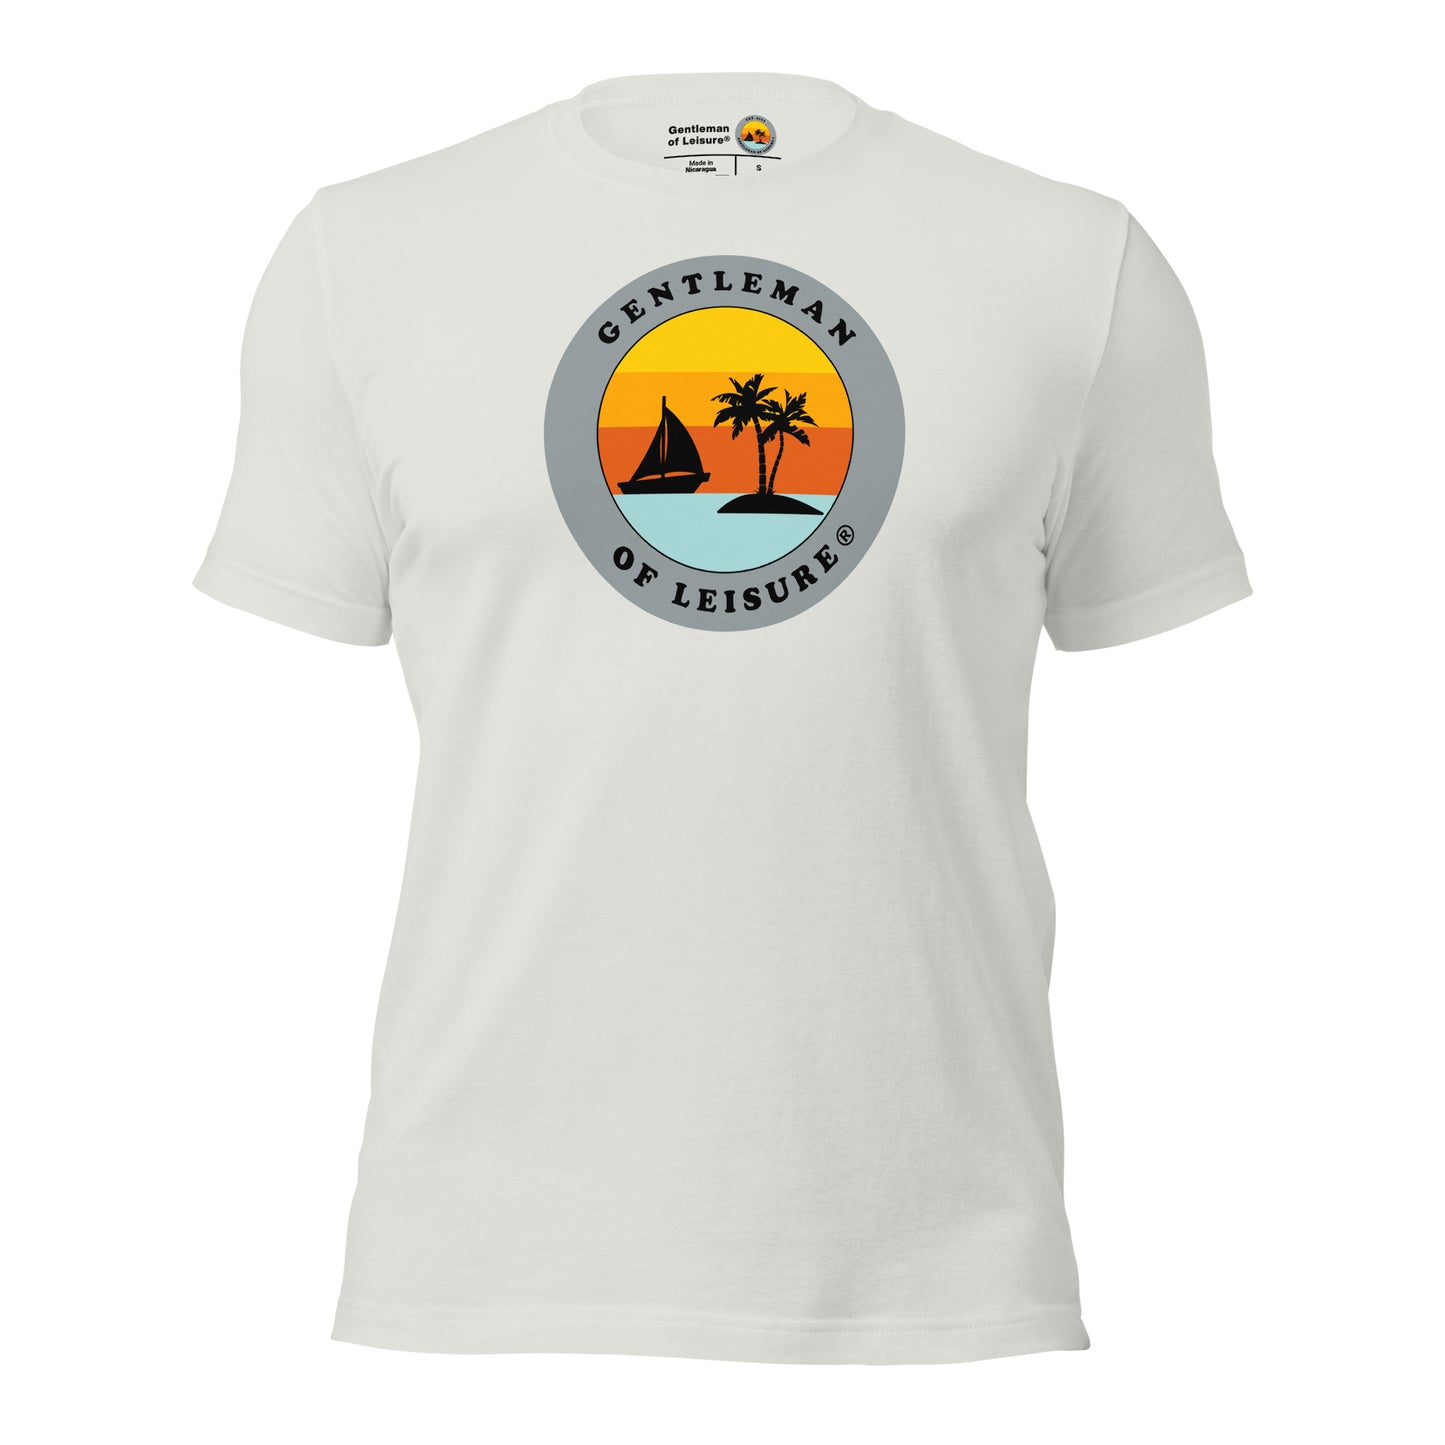 Gentleman of Leisure - Premium T Shirt - (gray logo)